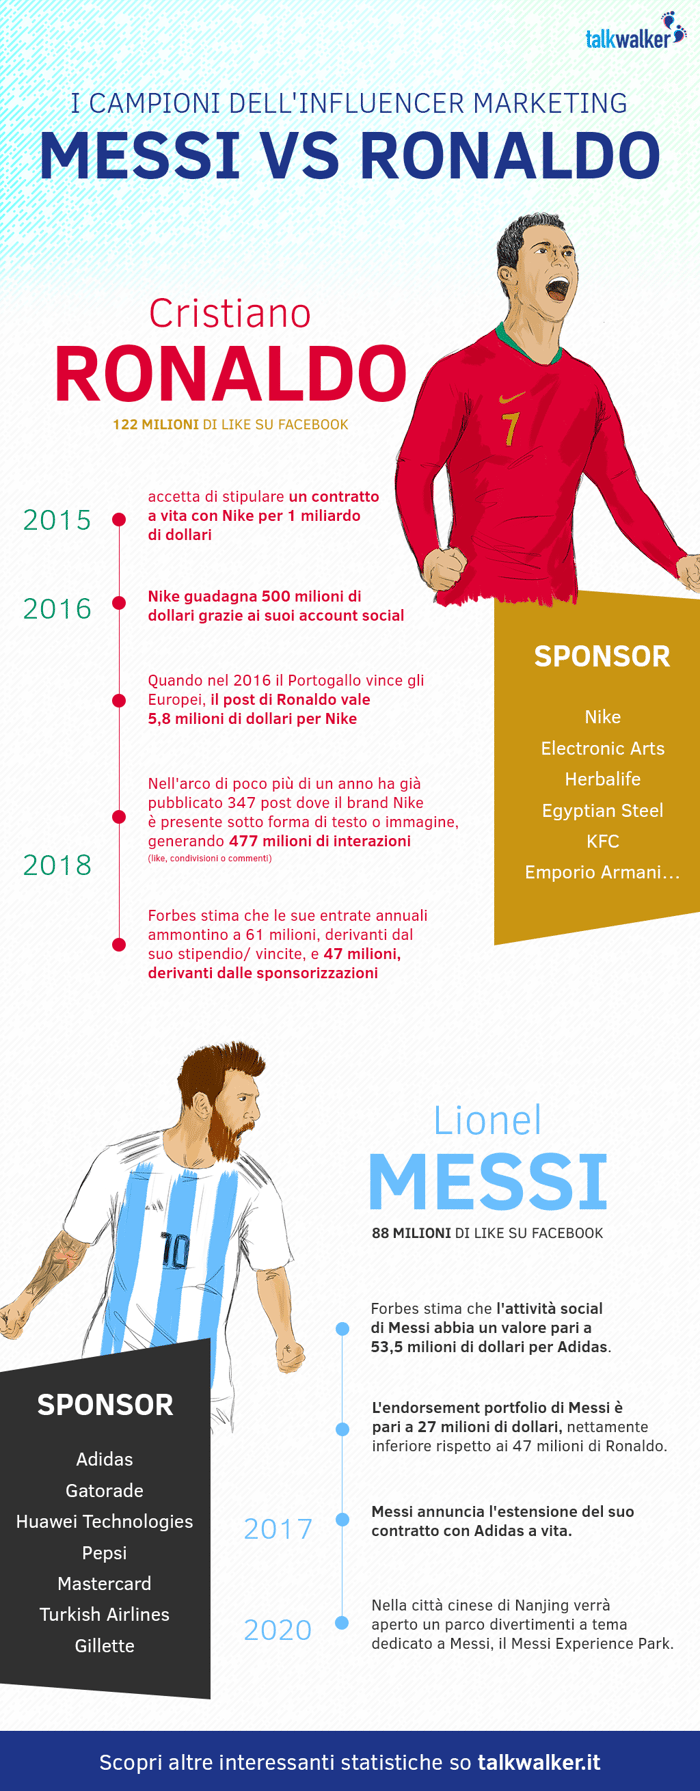 Ronaldo vs Messi Marketing